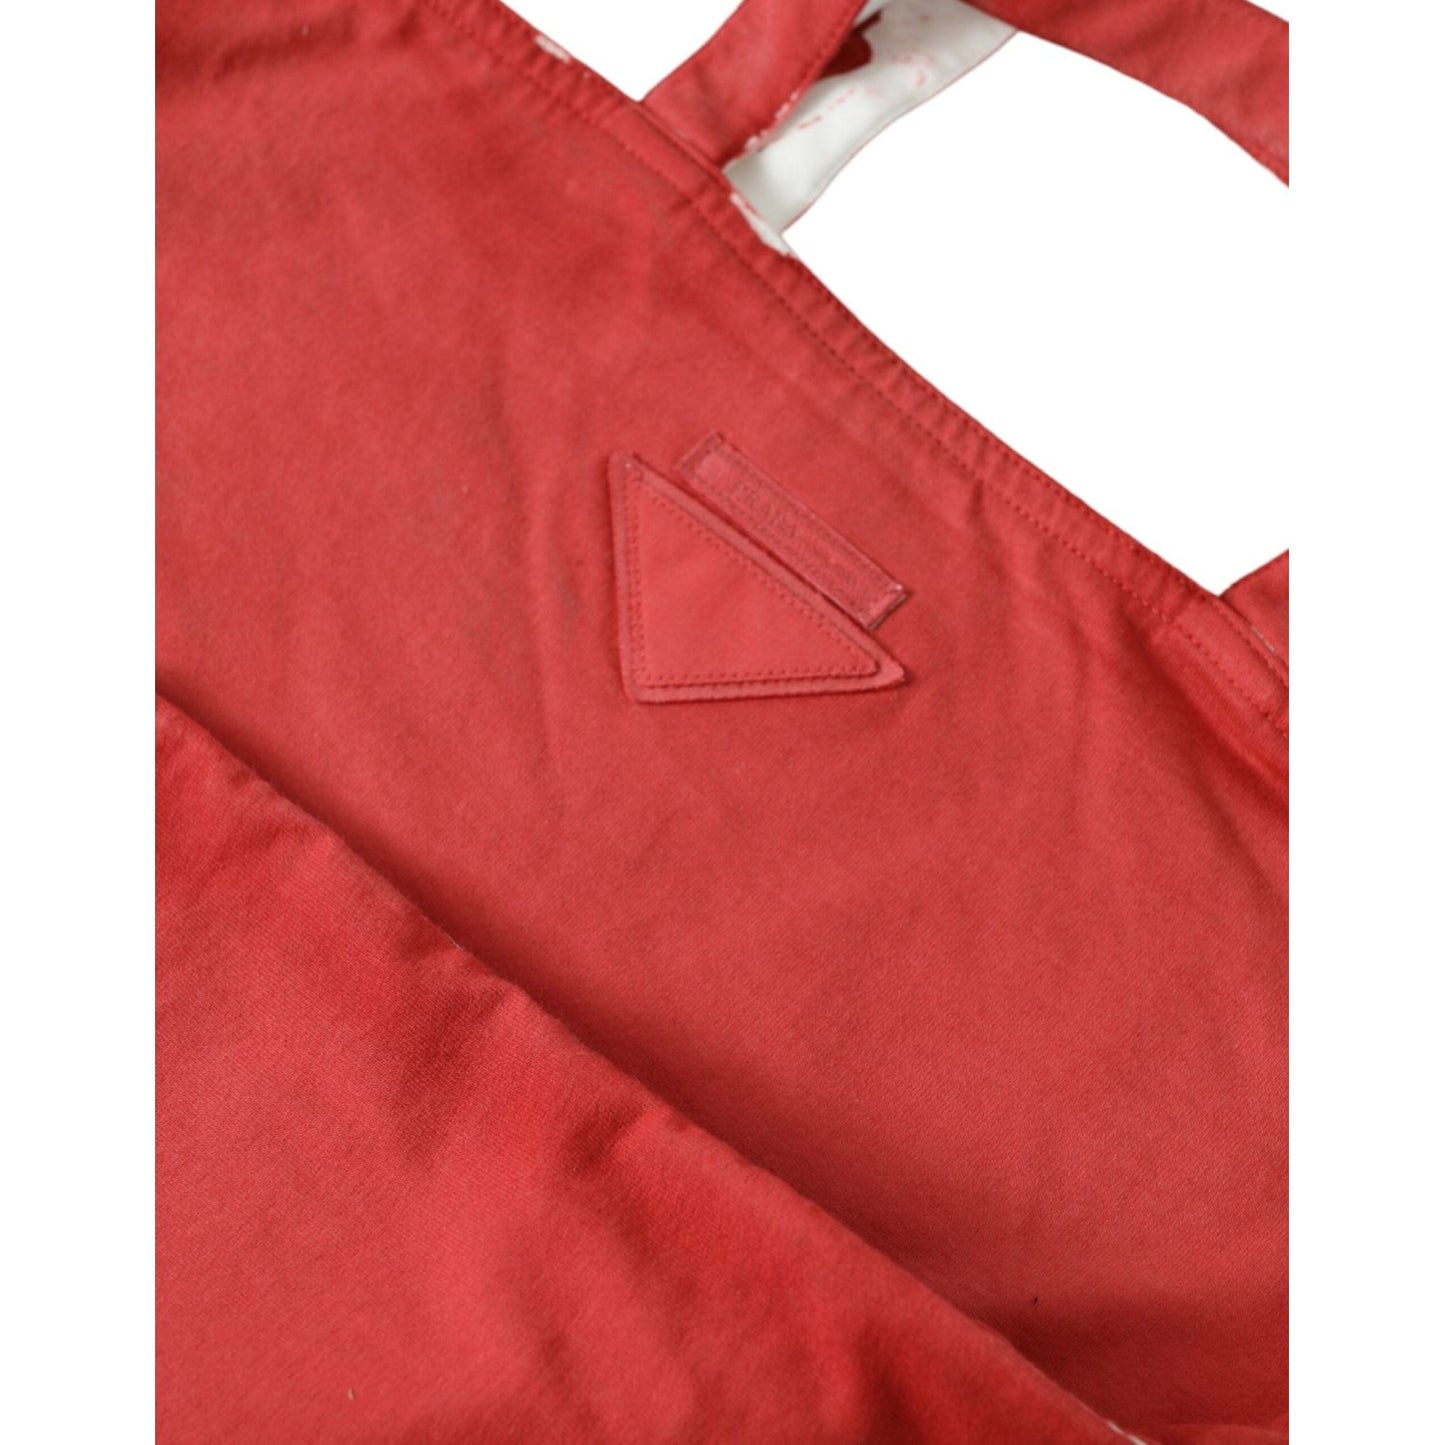 Prada Chic Red and White Fabric Tote Bag chic-red-and-white-fabric-tote-bag